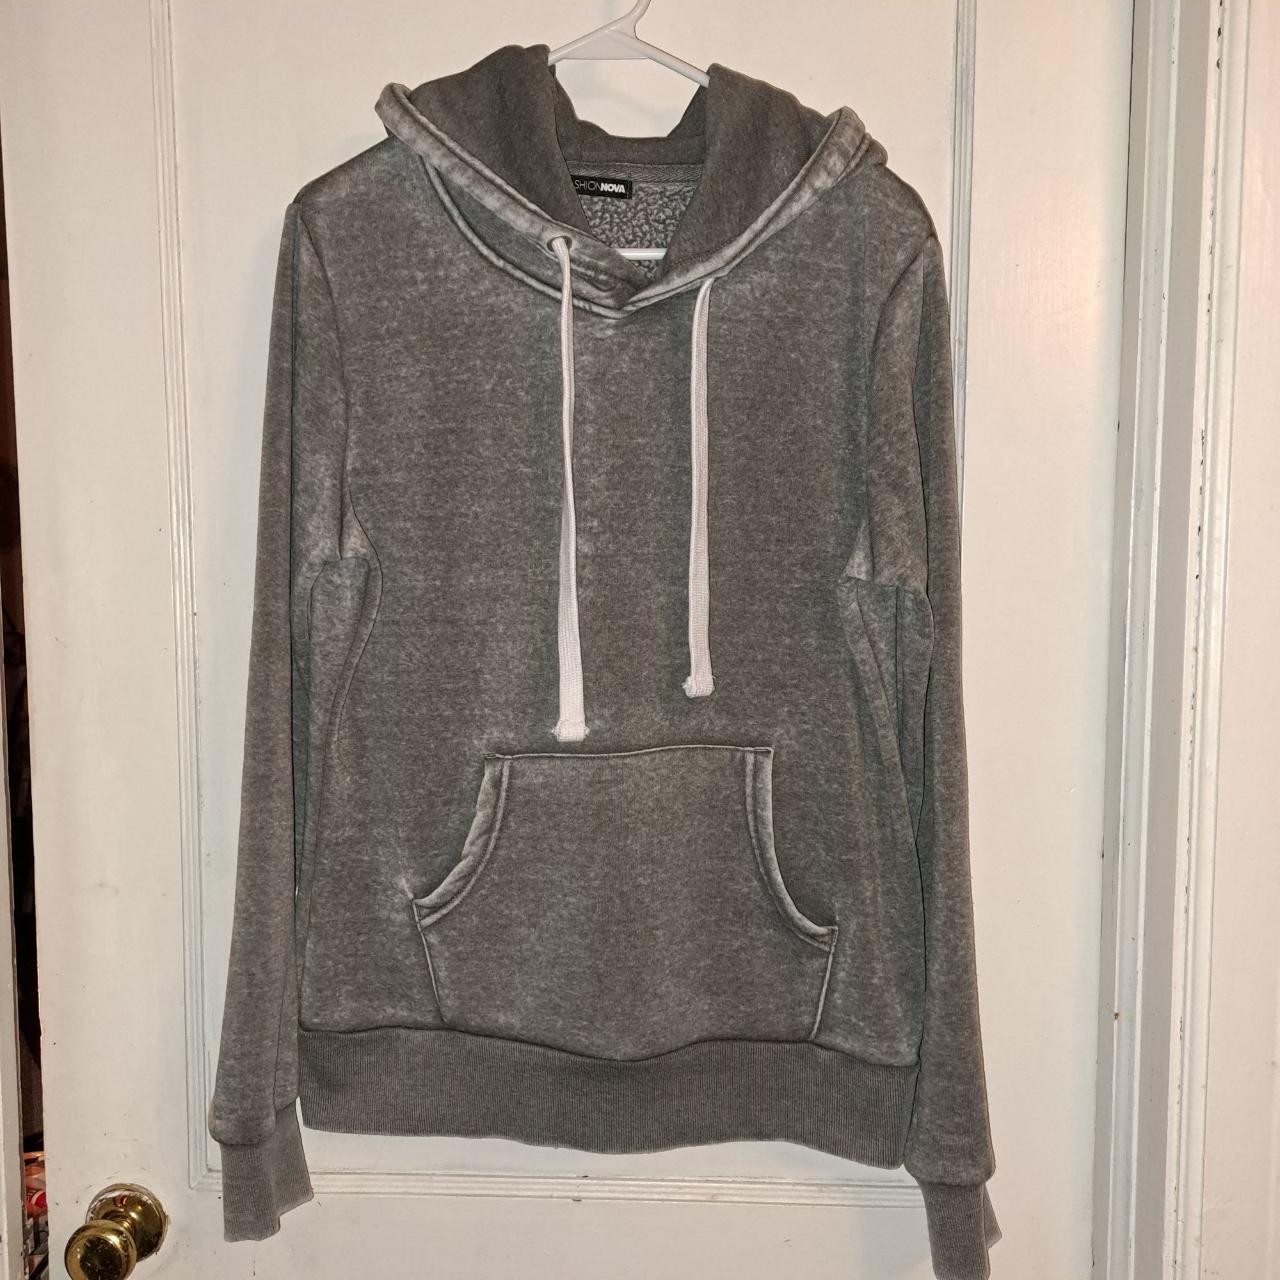 Fashion Nova pullover hoodie sweatshirt in grey with... - Depop